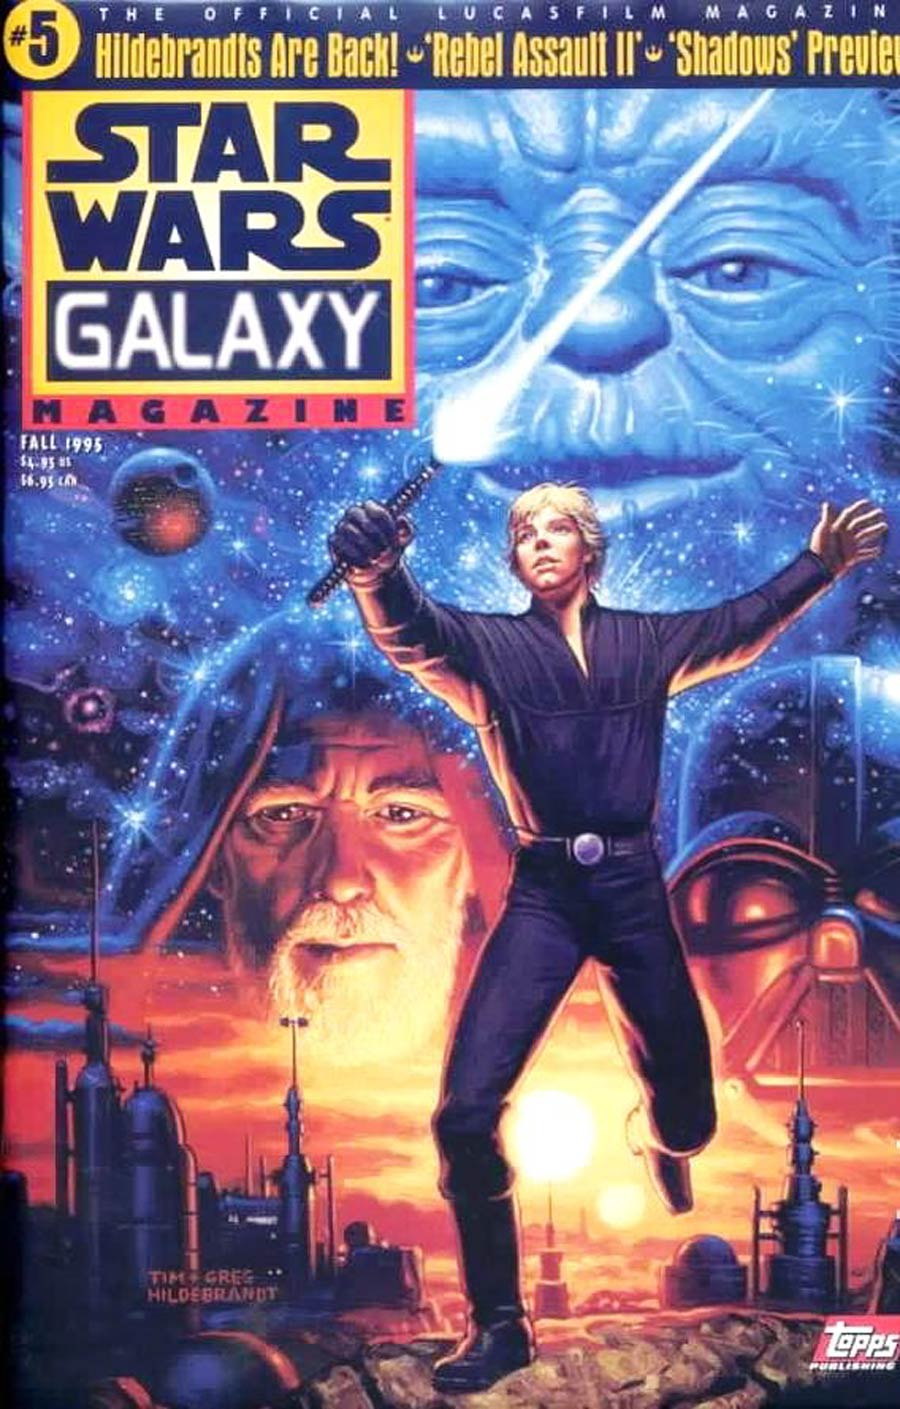 Star Wars Galaxy Magazine #5 Cover B No Polybag